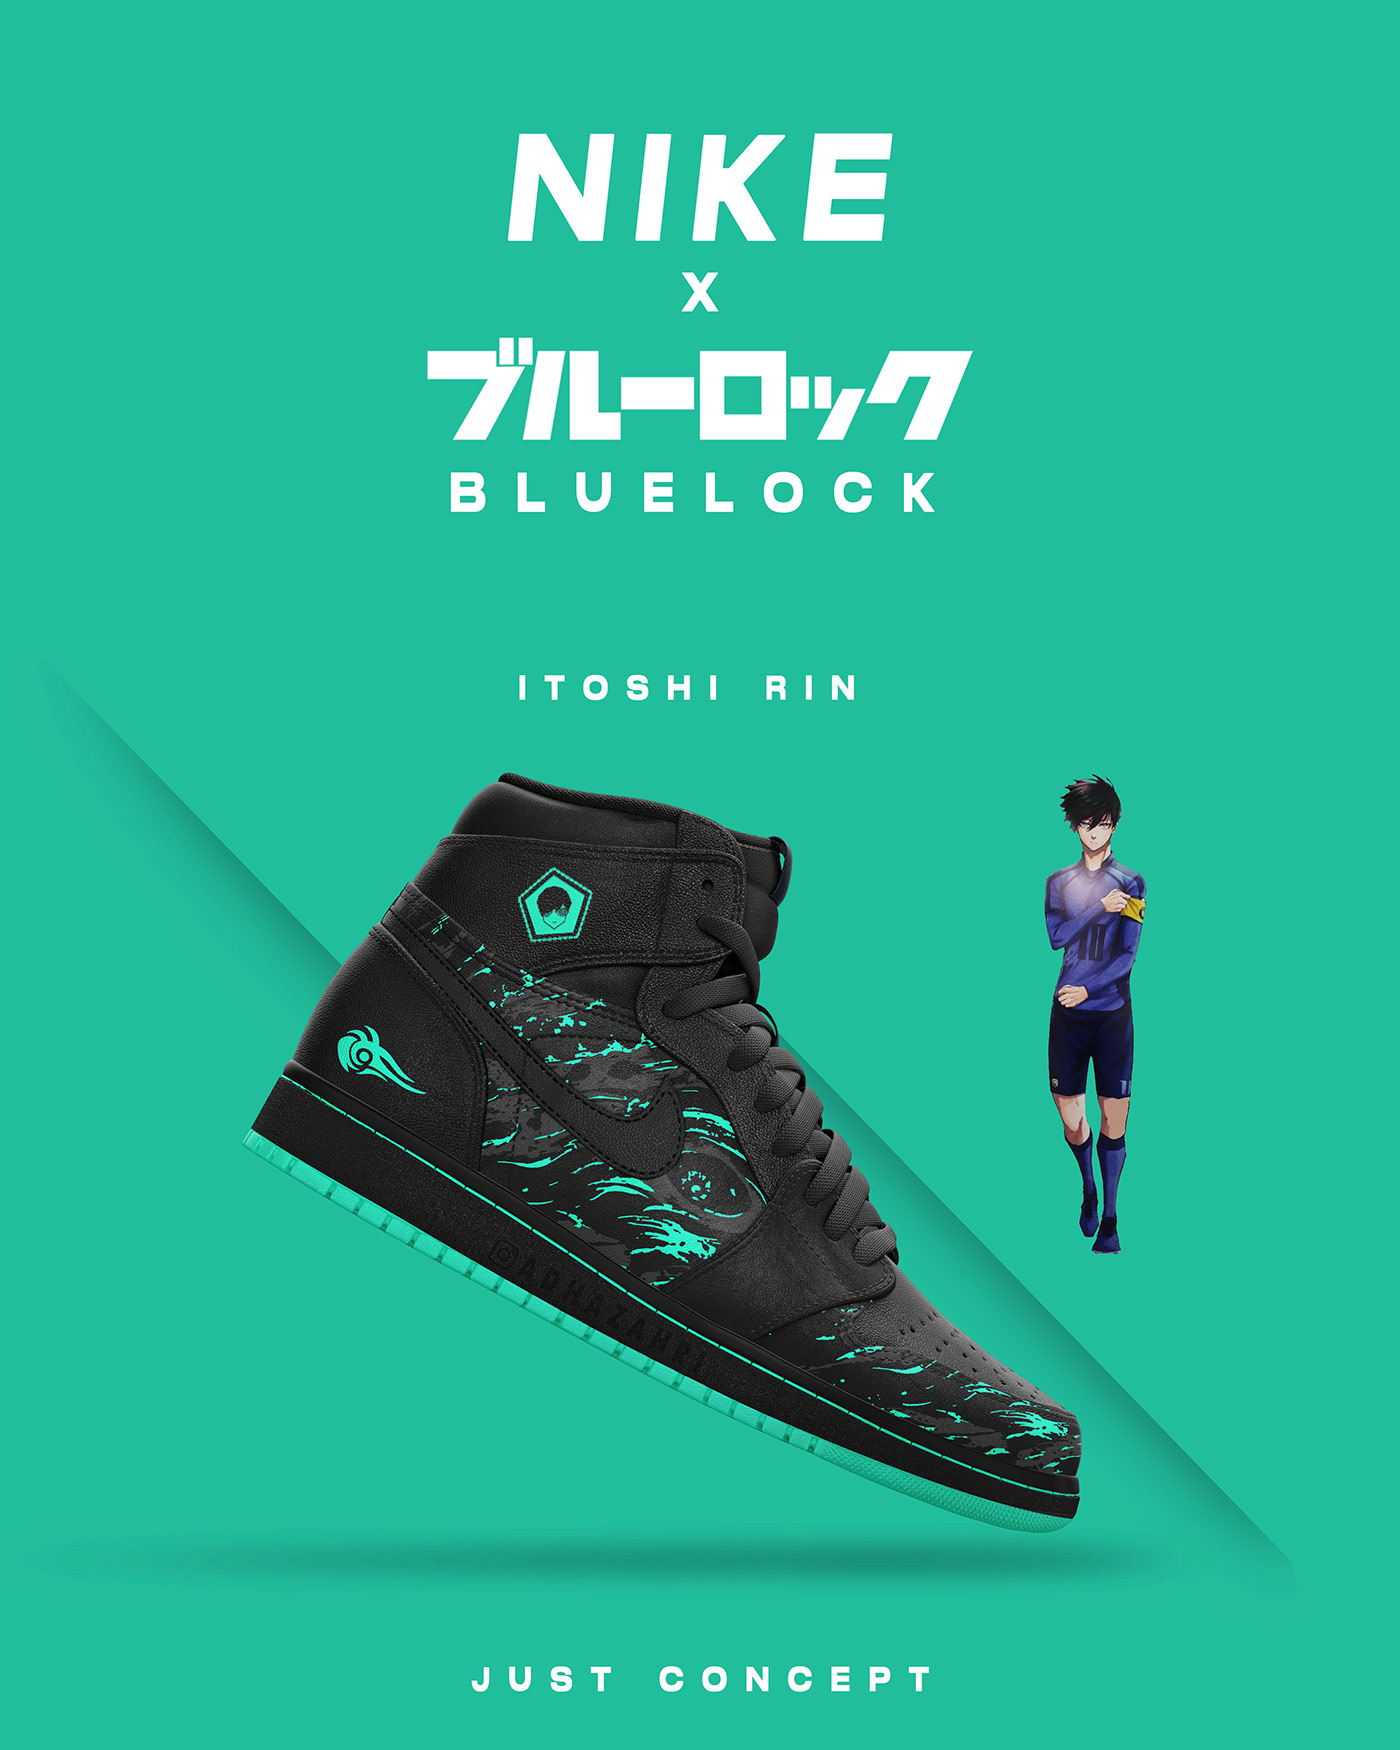 airjordan1 anime bluelock bluelockshoe bluelockxnike Nike nikexbluelock shoes sneakers snimesneakers